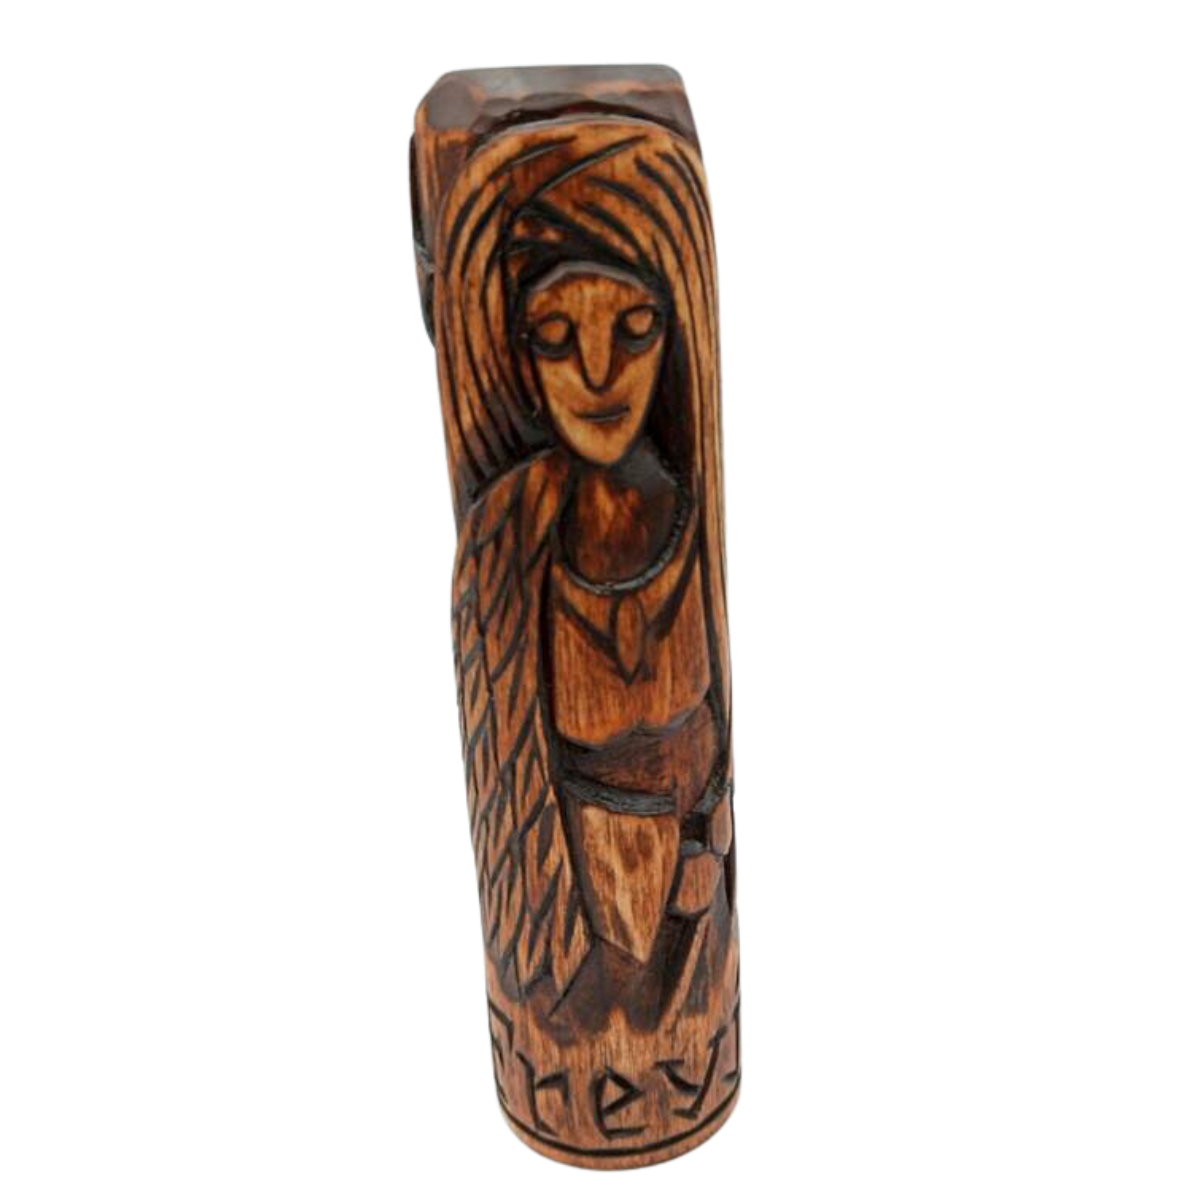 Freya goddesse wood carved statue   